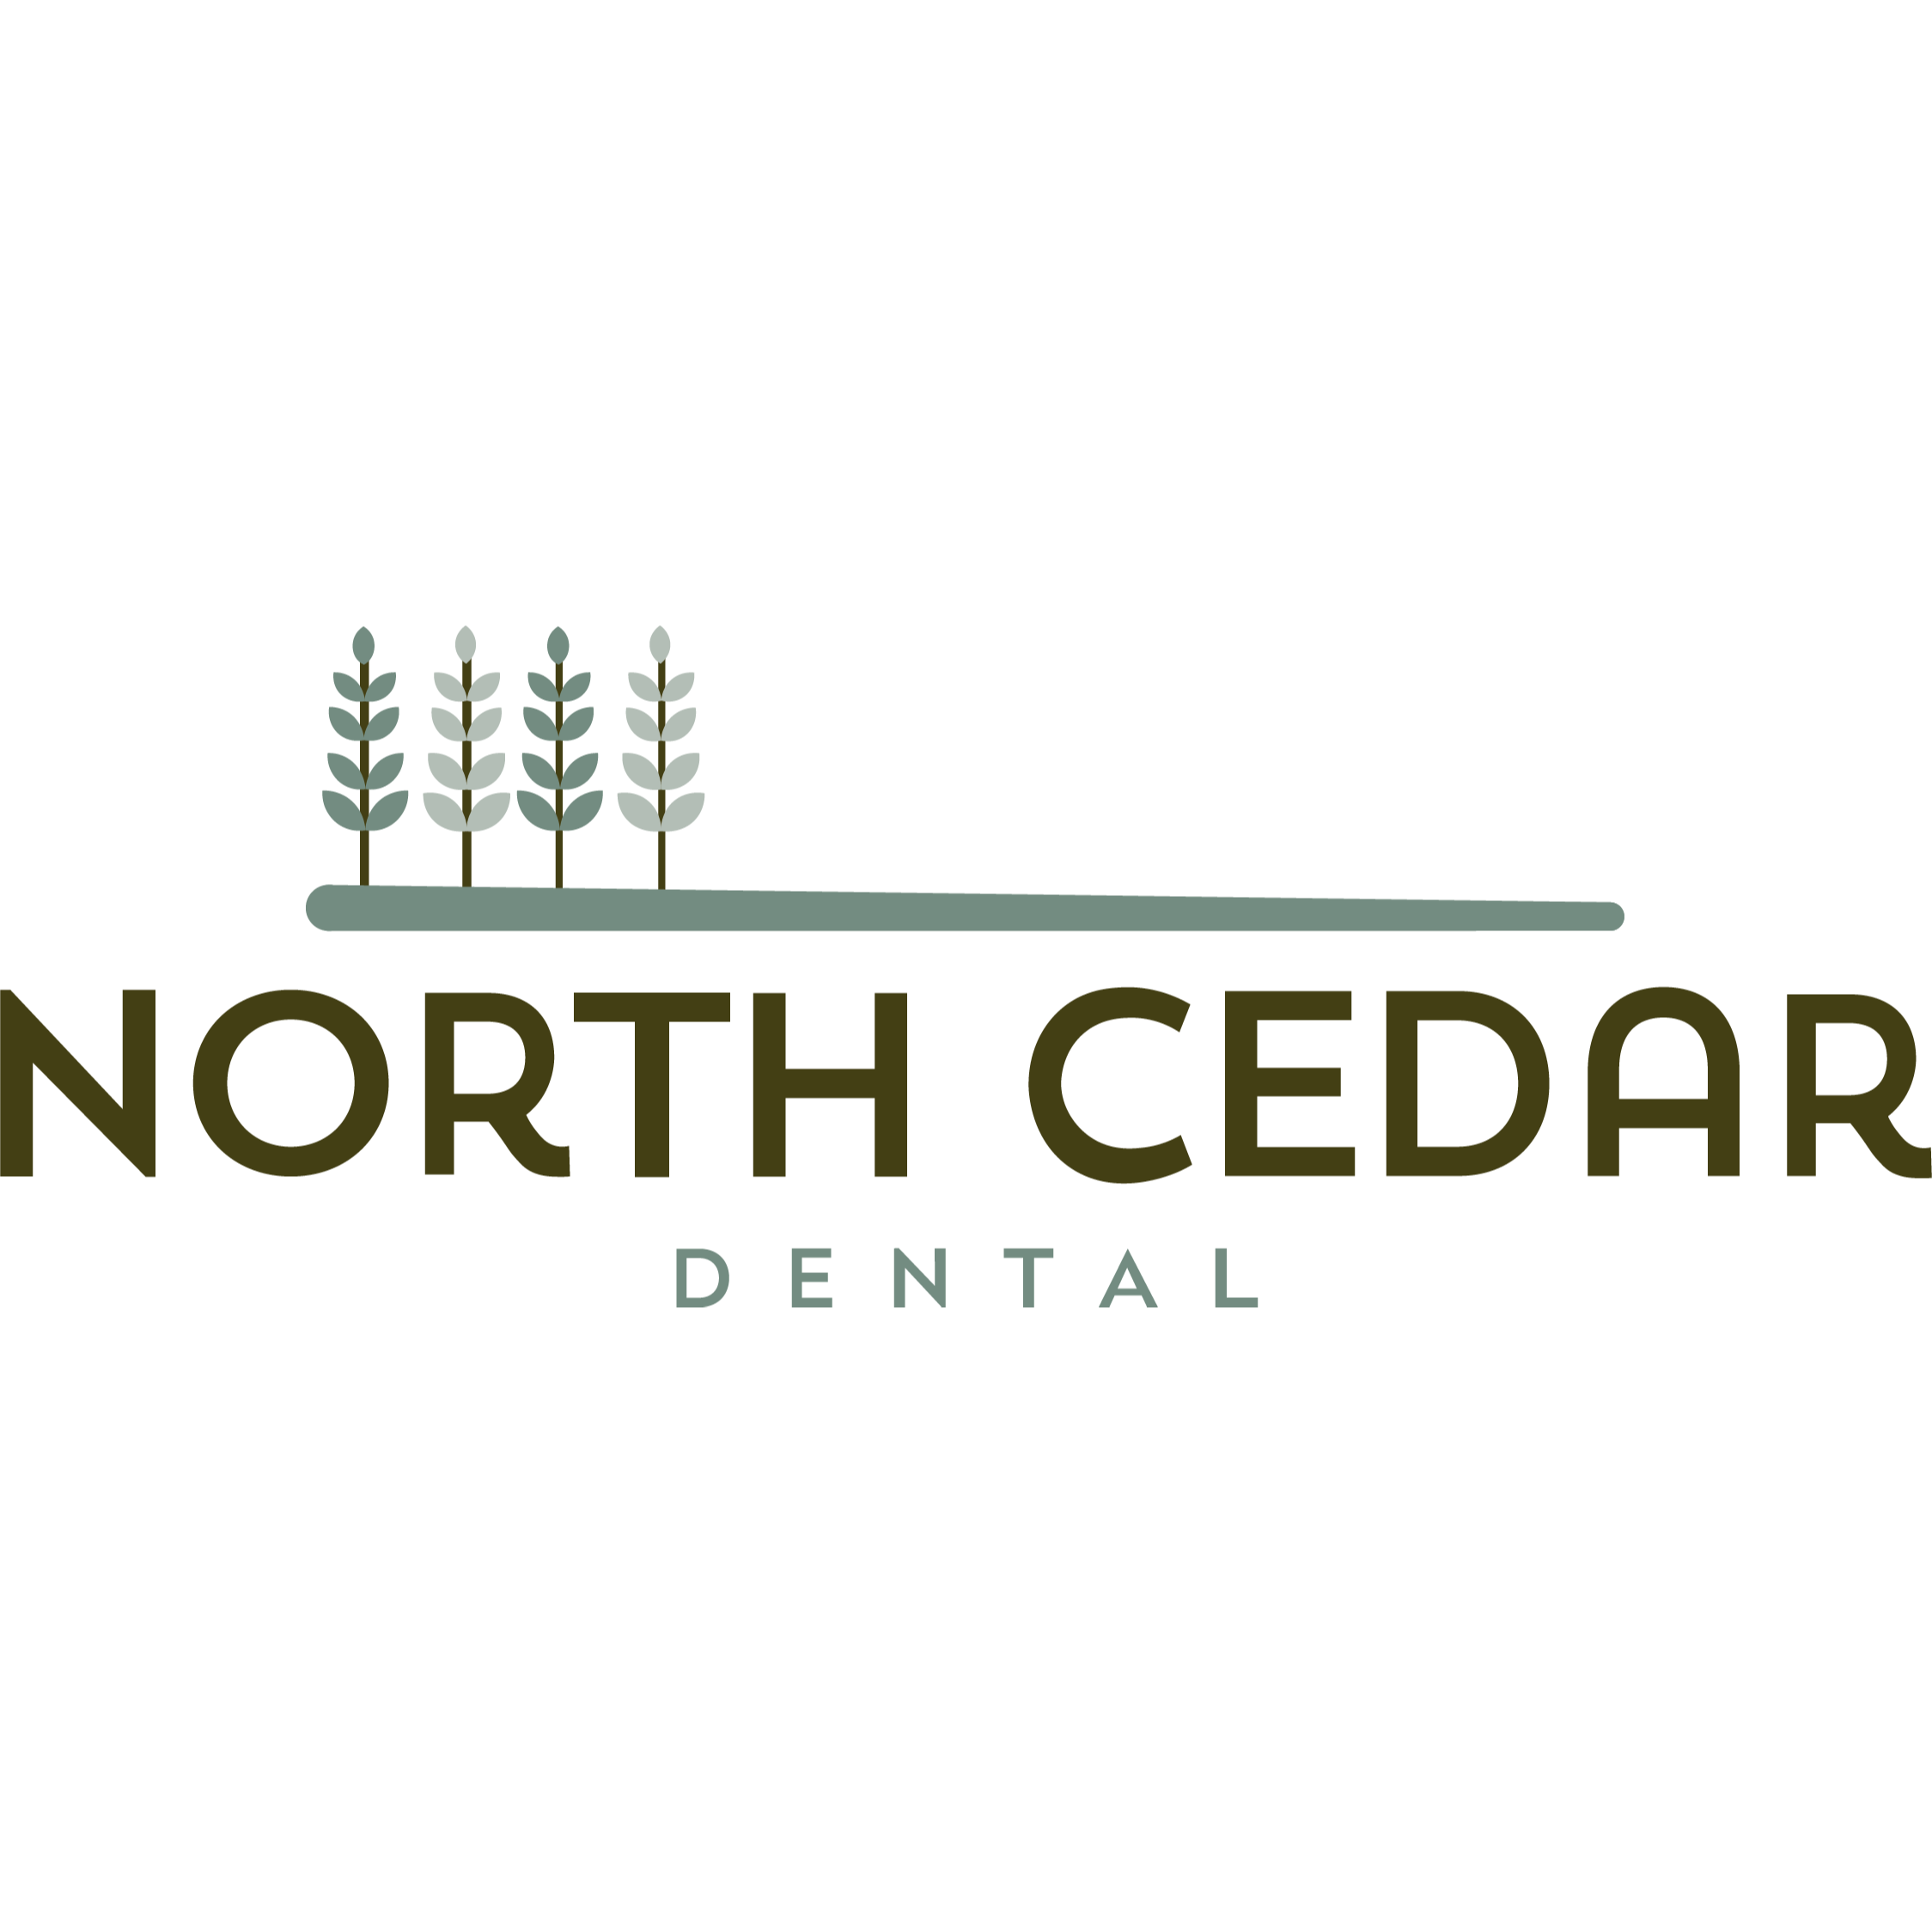 North Cedar Dental - Spokane, WA 99208 - (509)325-0233 | ShowMeLocal.com